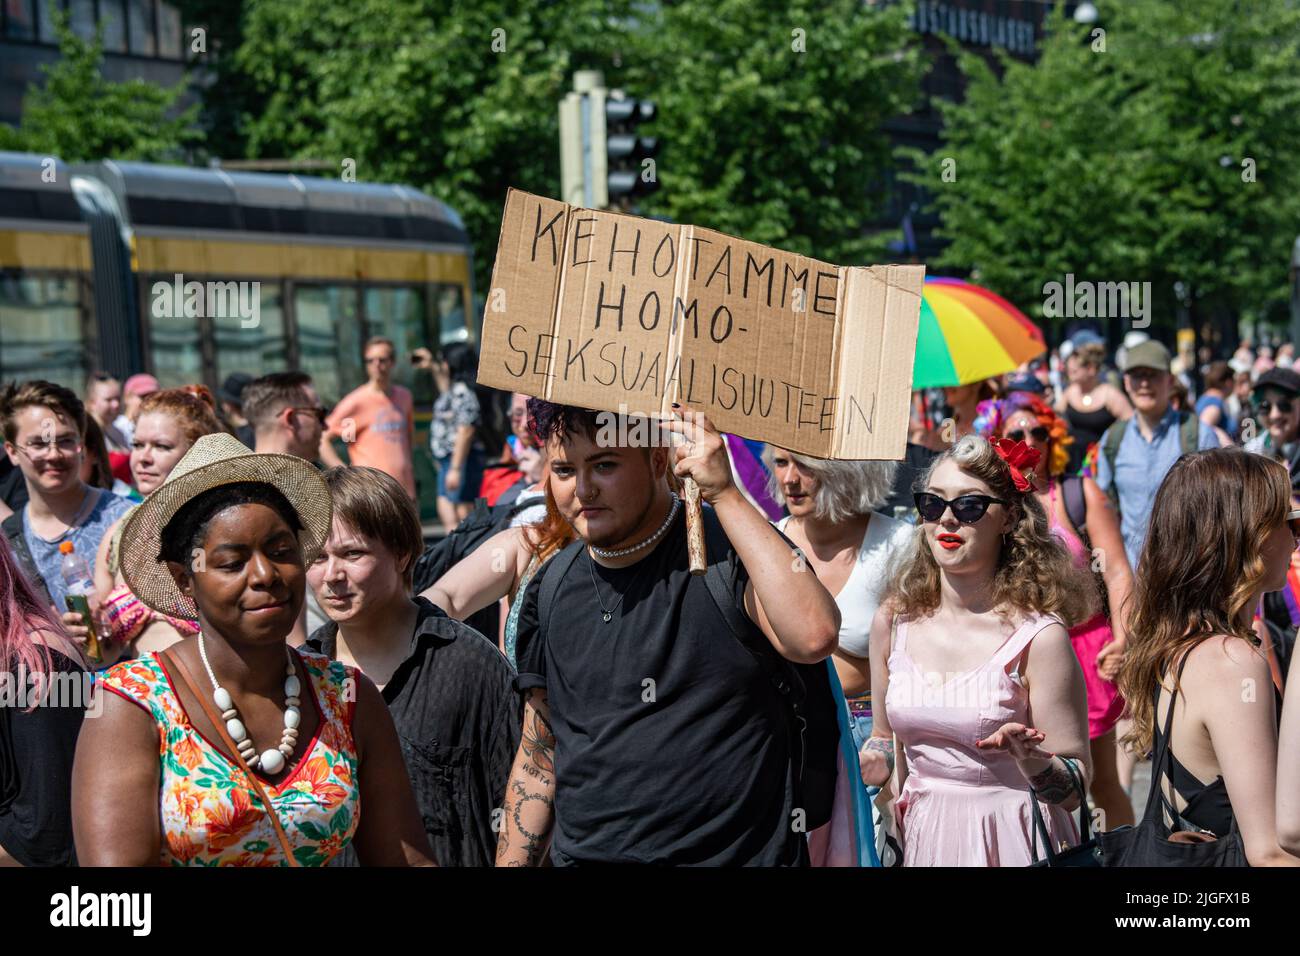 Kehotamme homoseksuaalisuteen. Mann mit handgeschriebenem Pappschild bei der Helsinki Pride 2022 Parade in Mannerheimintie, Helsinki, Finnland. Stockfoto